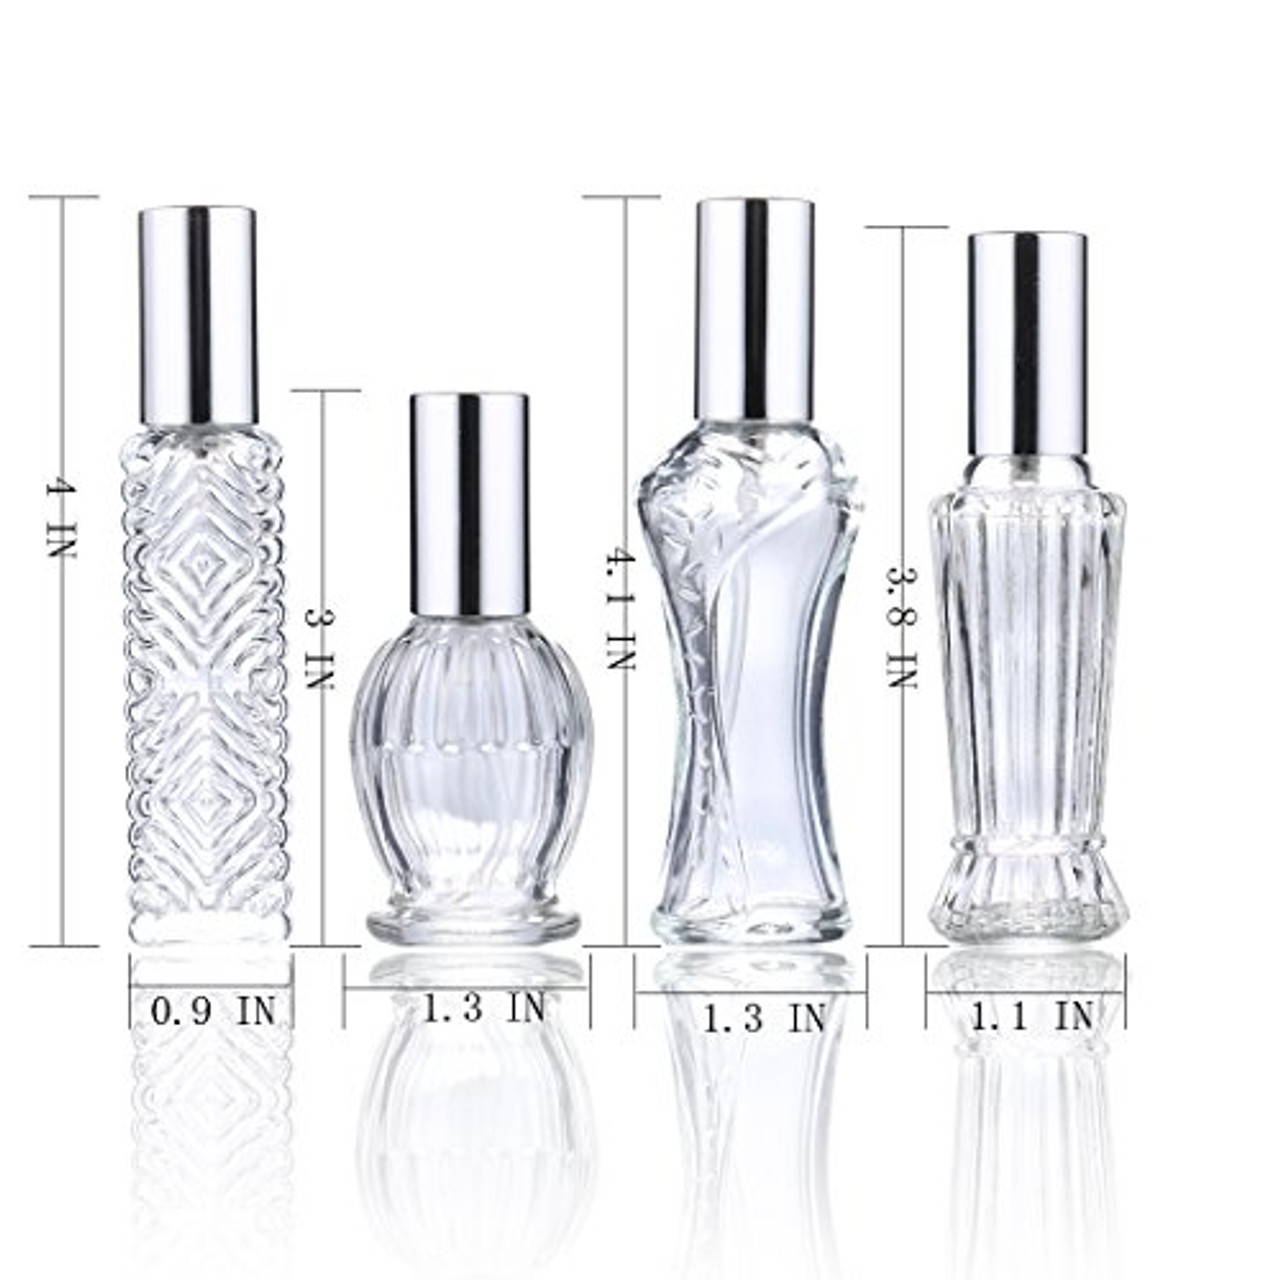 Perfume bottle manufacturer for Gucci and L'Oréal in danger